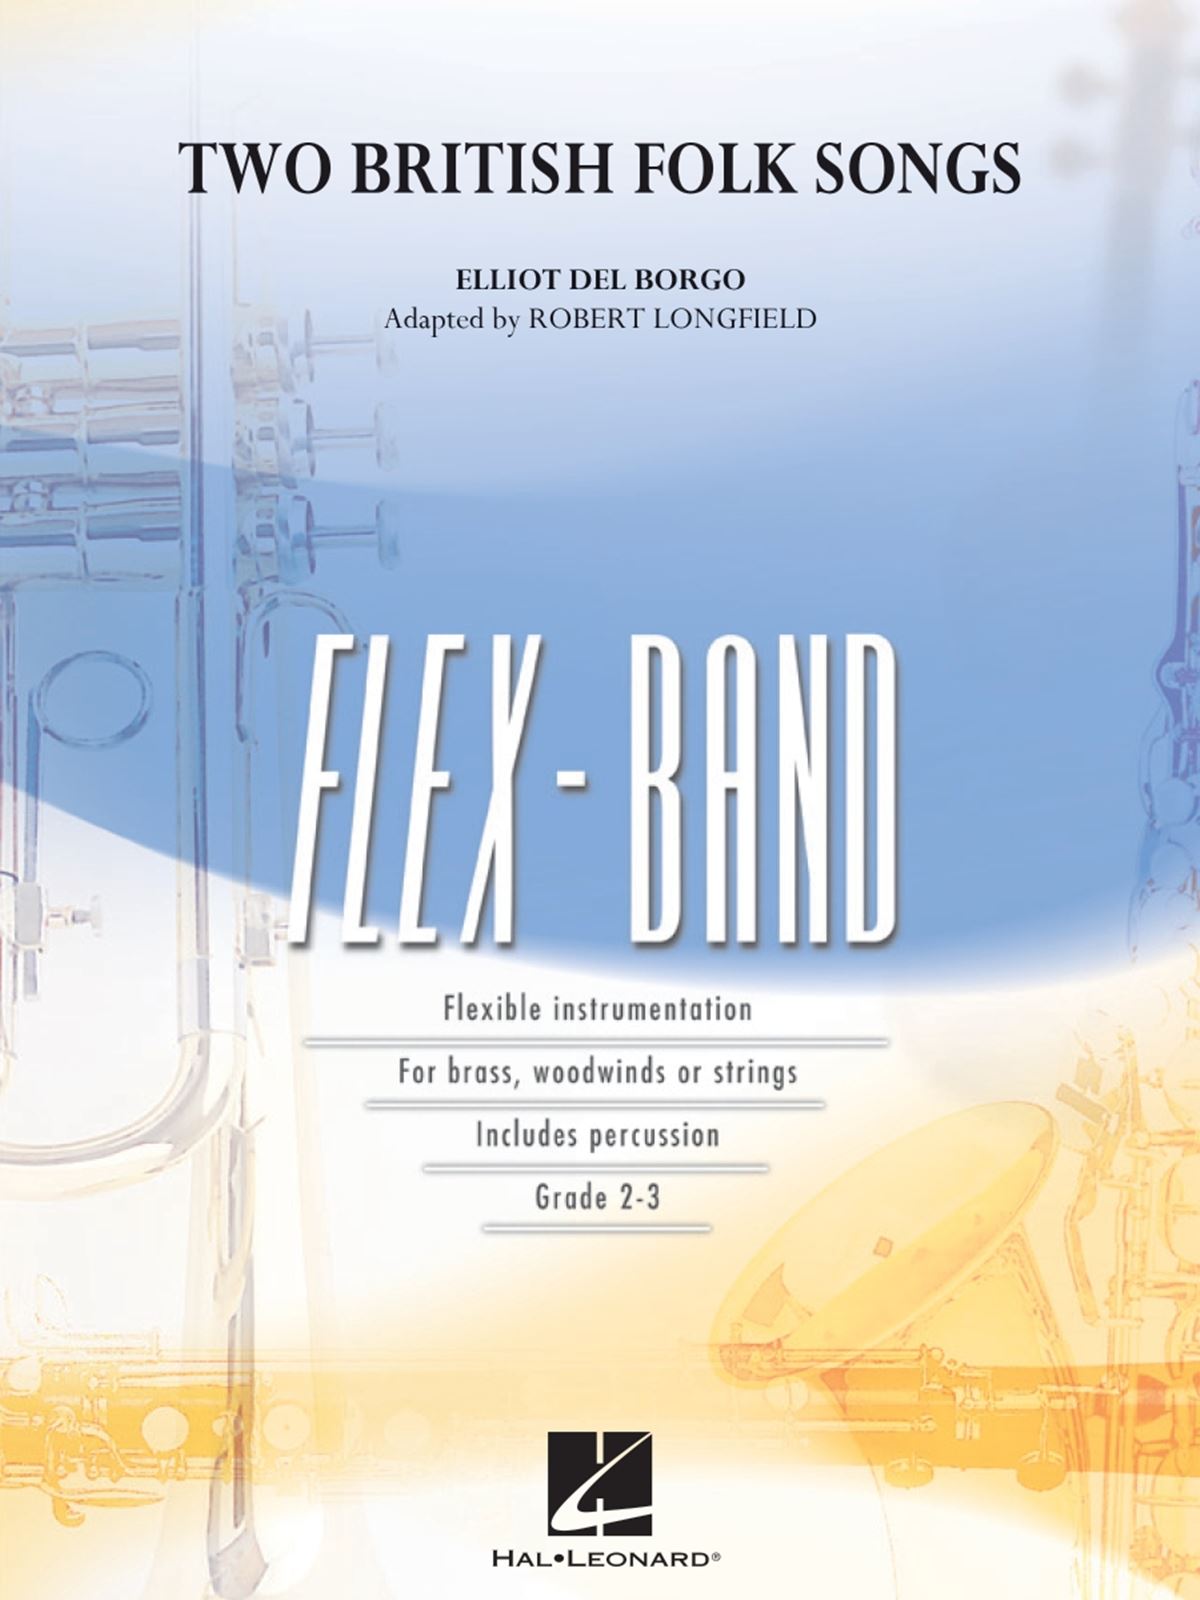 Elliot del Borgo: Two British Folk Songs: Flexible Band: Score and Parts